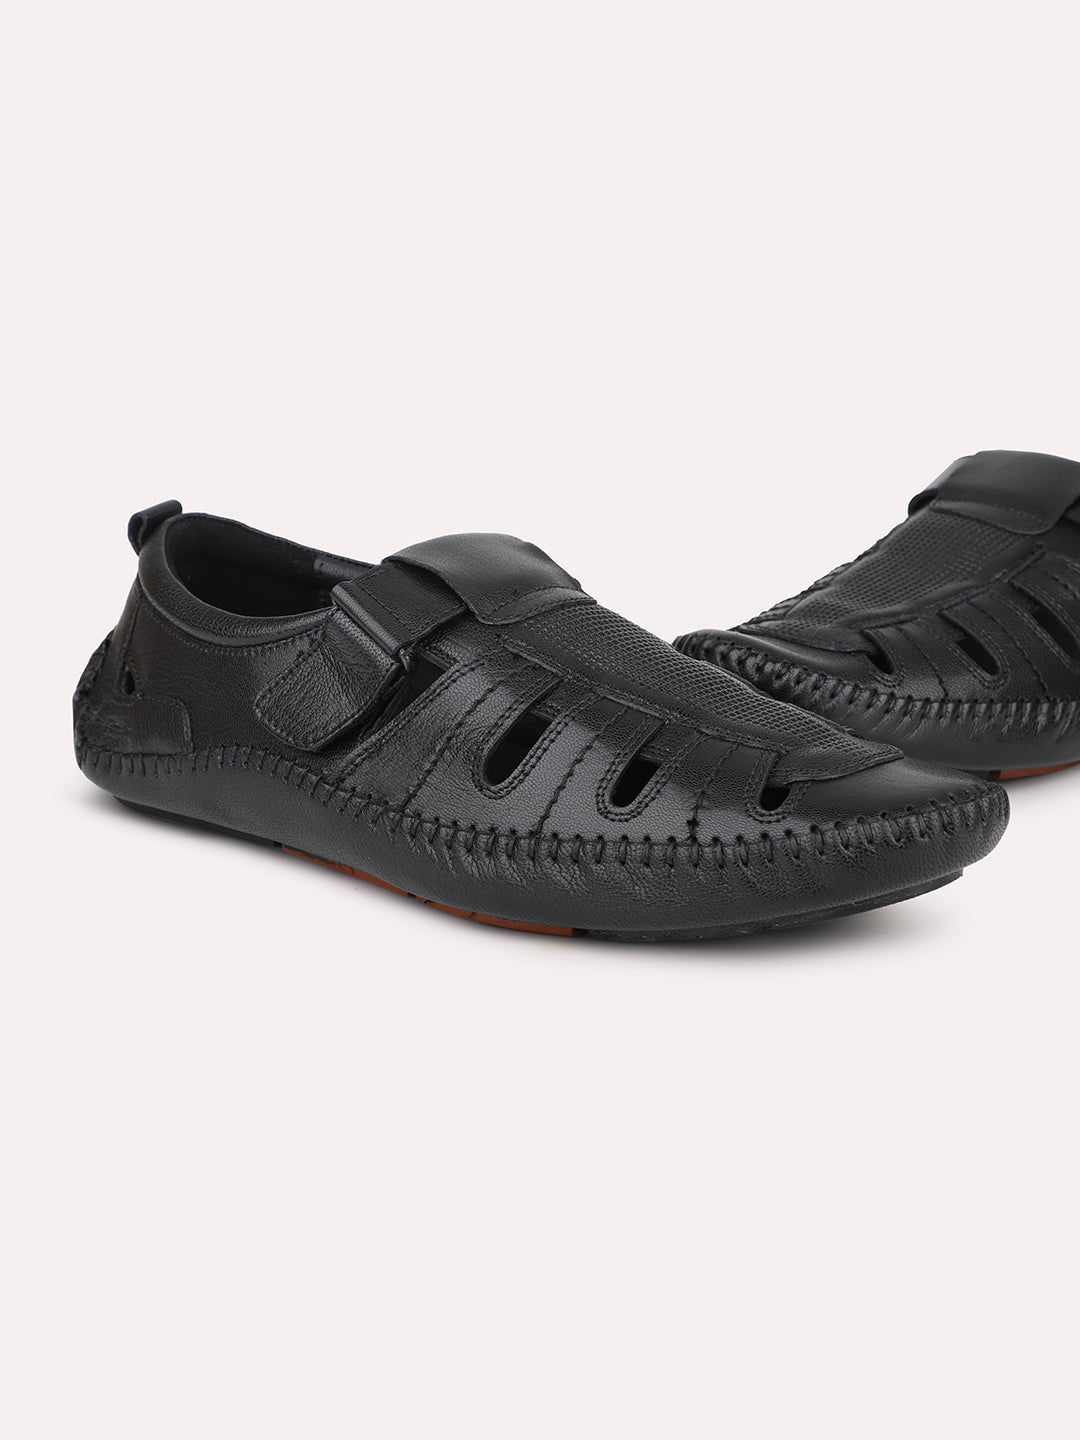 Atesber Black Striped Casual Sandal For Men